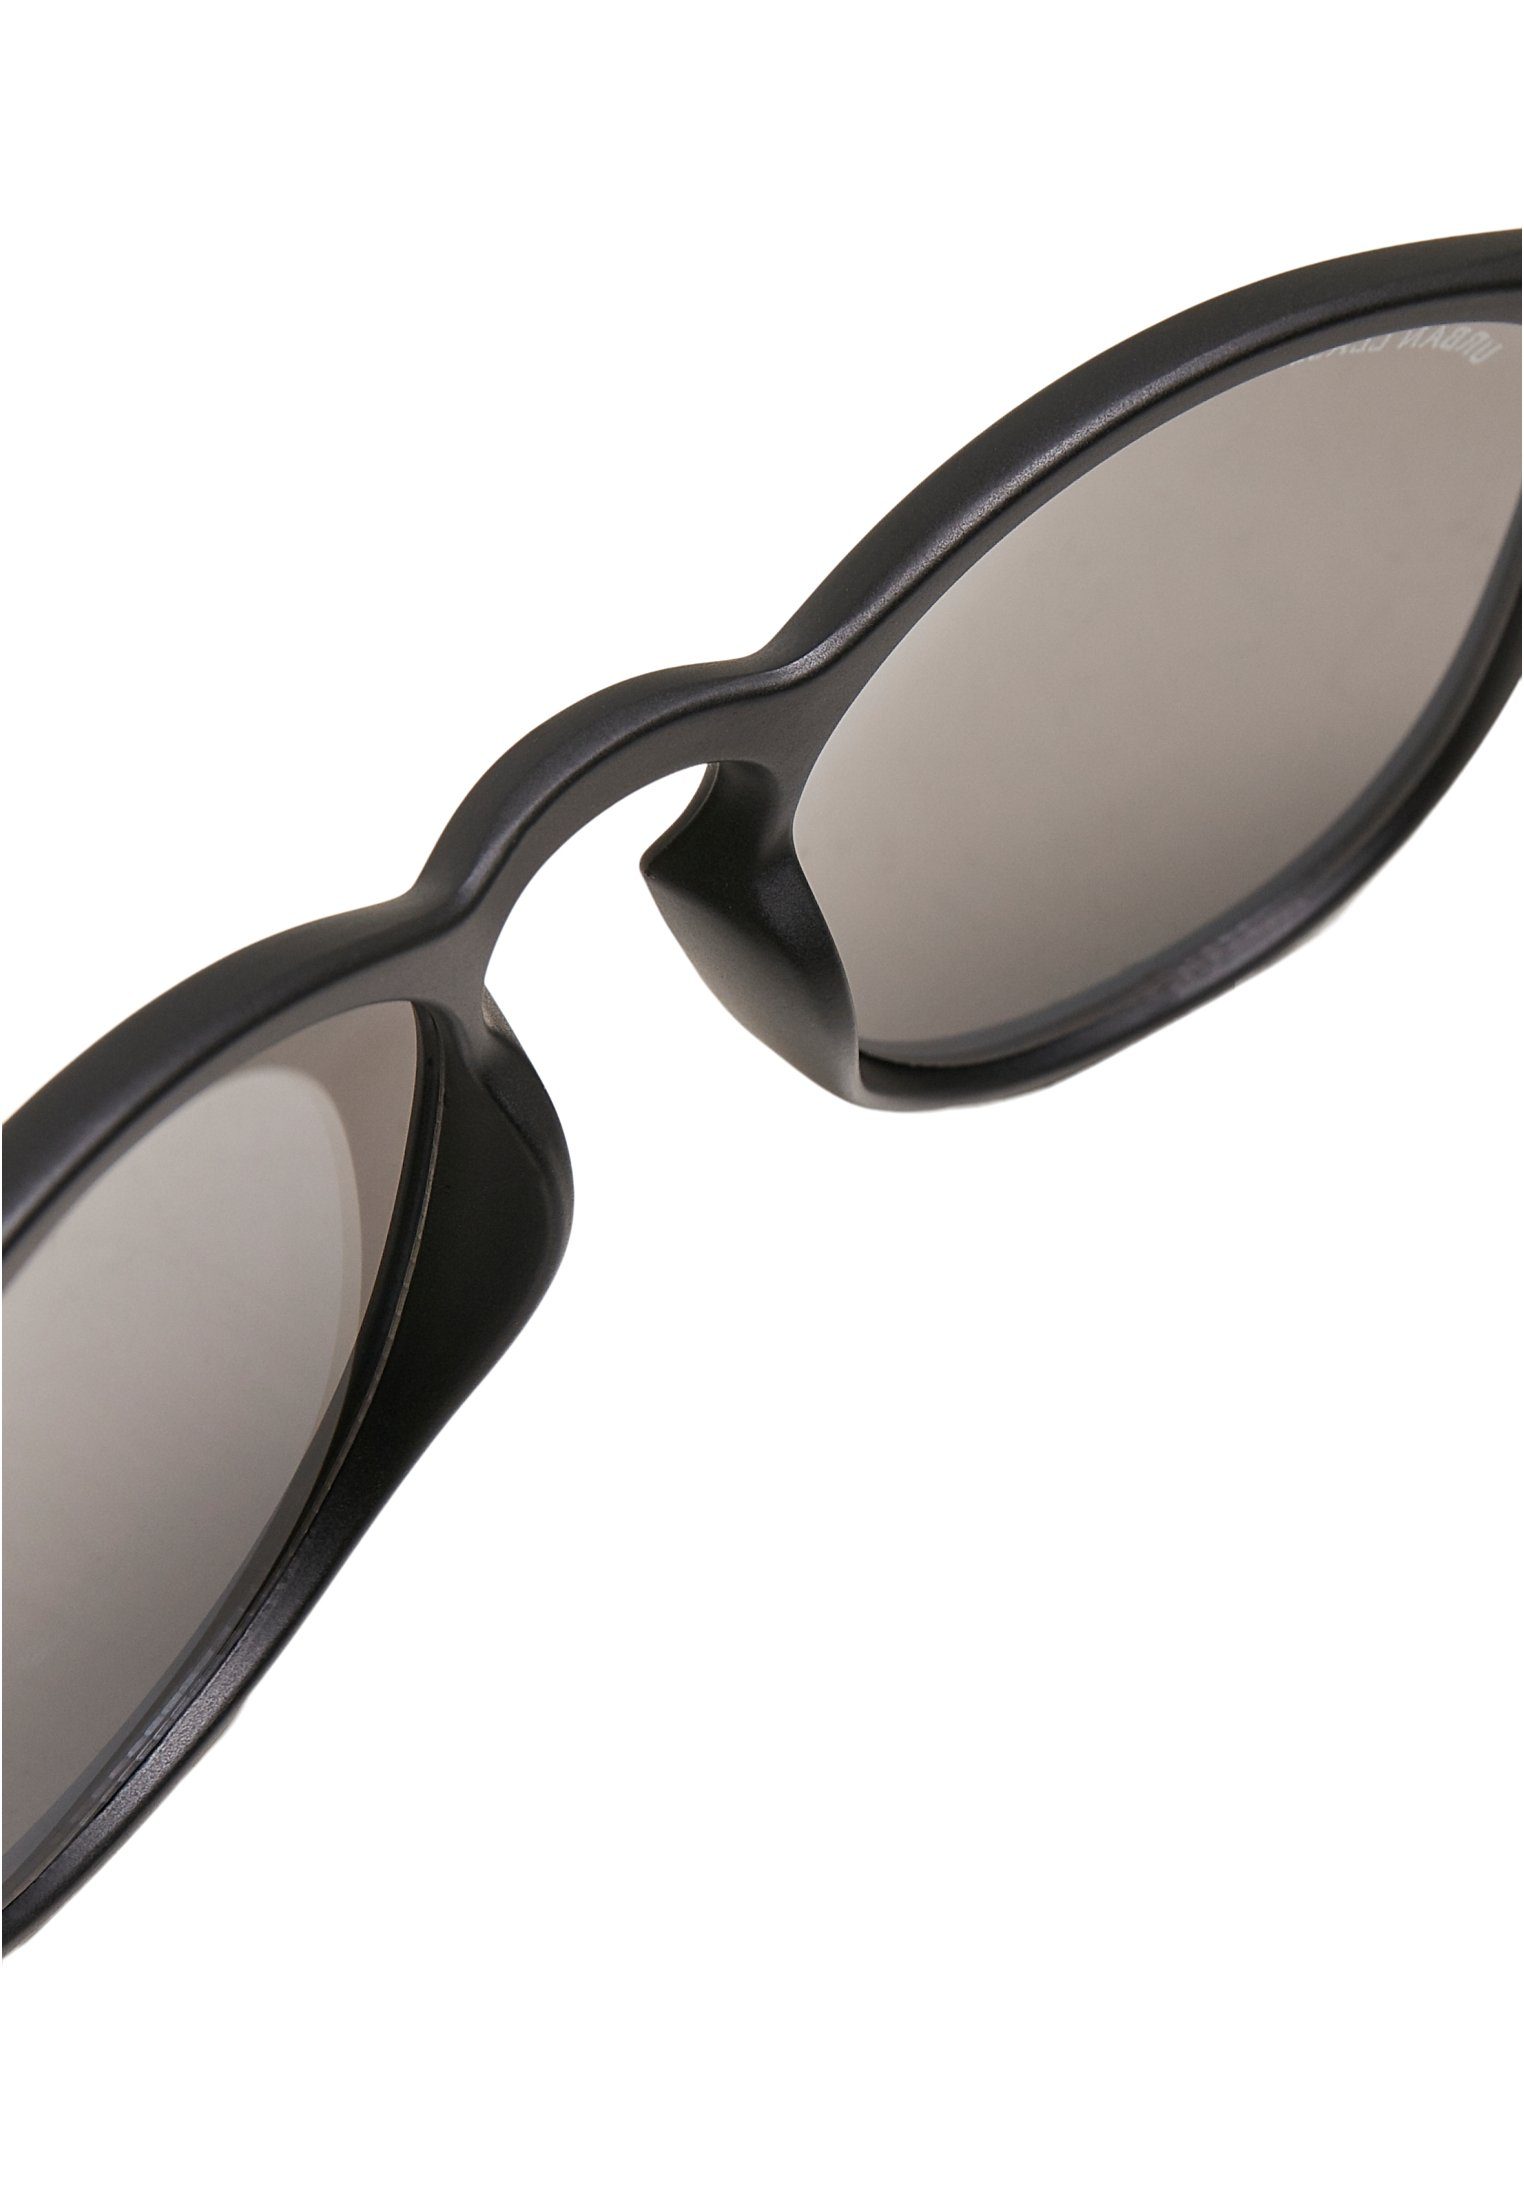 Accessoires Sonnenbrille Sunglasses URBAN 106 black/silver CLASSICS UC